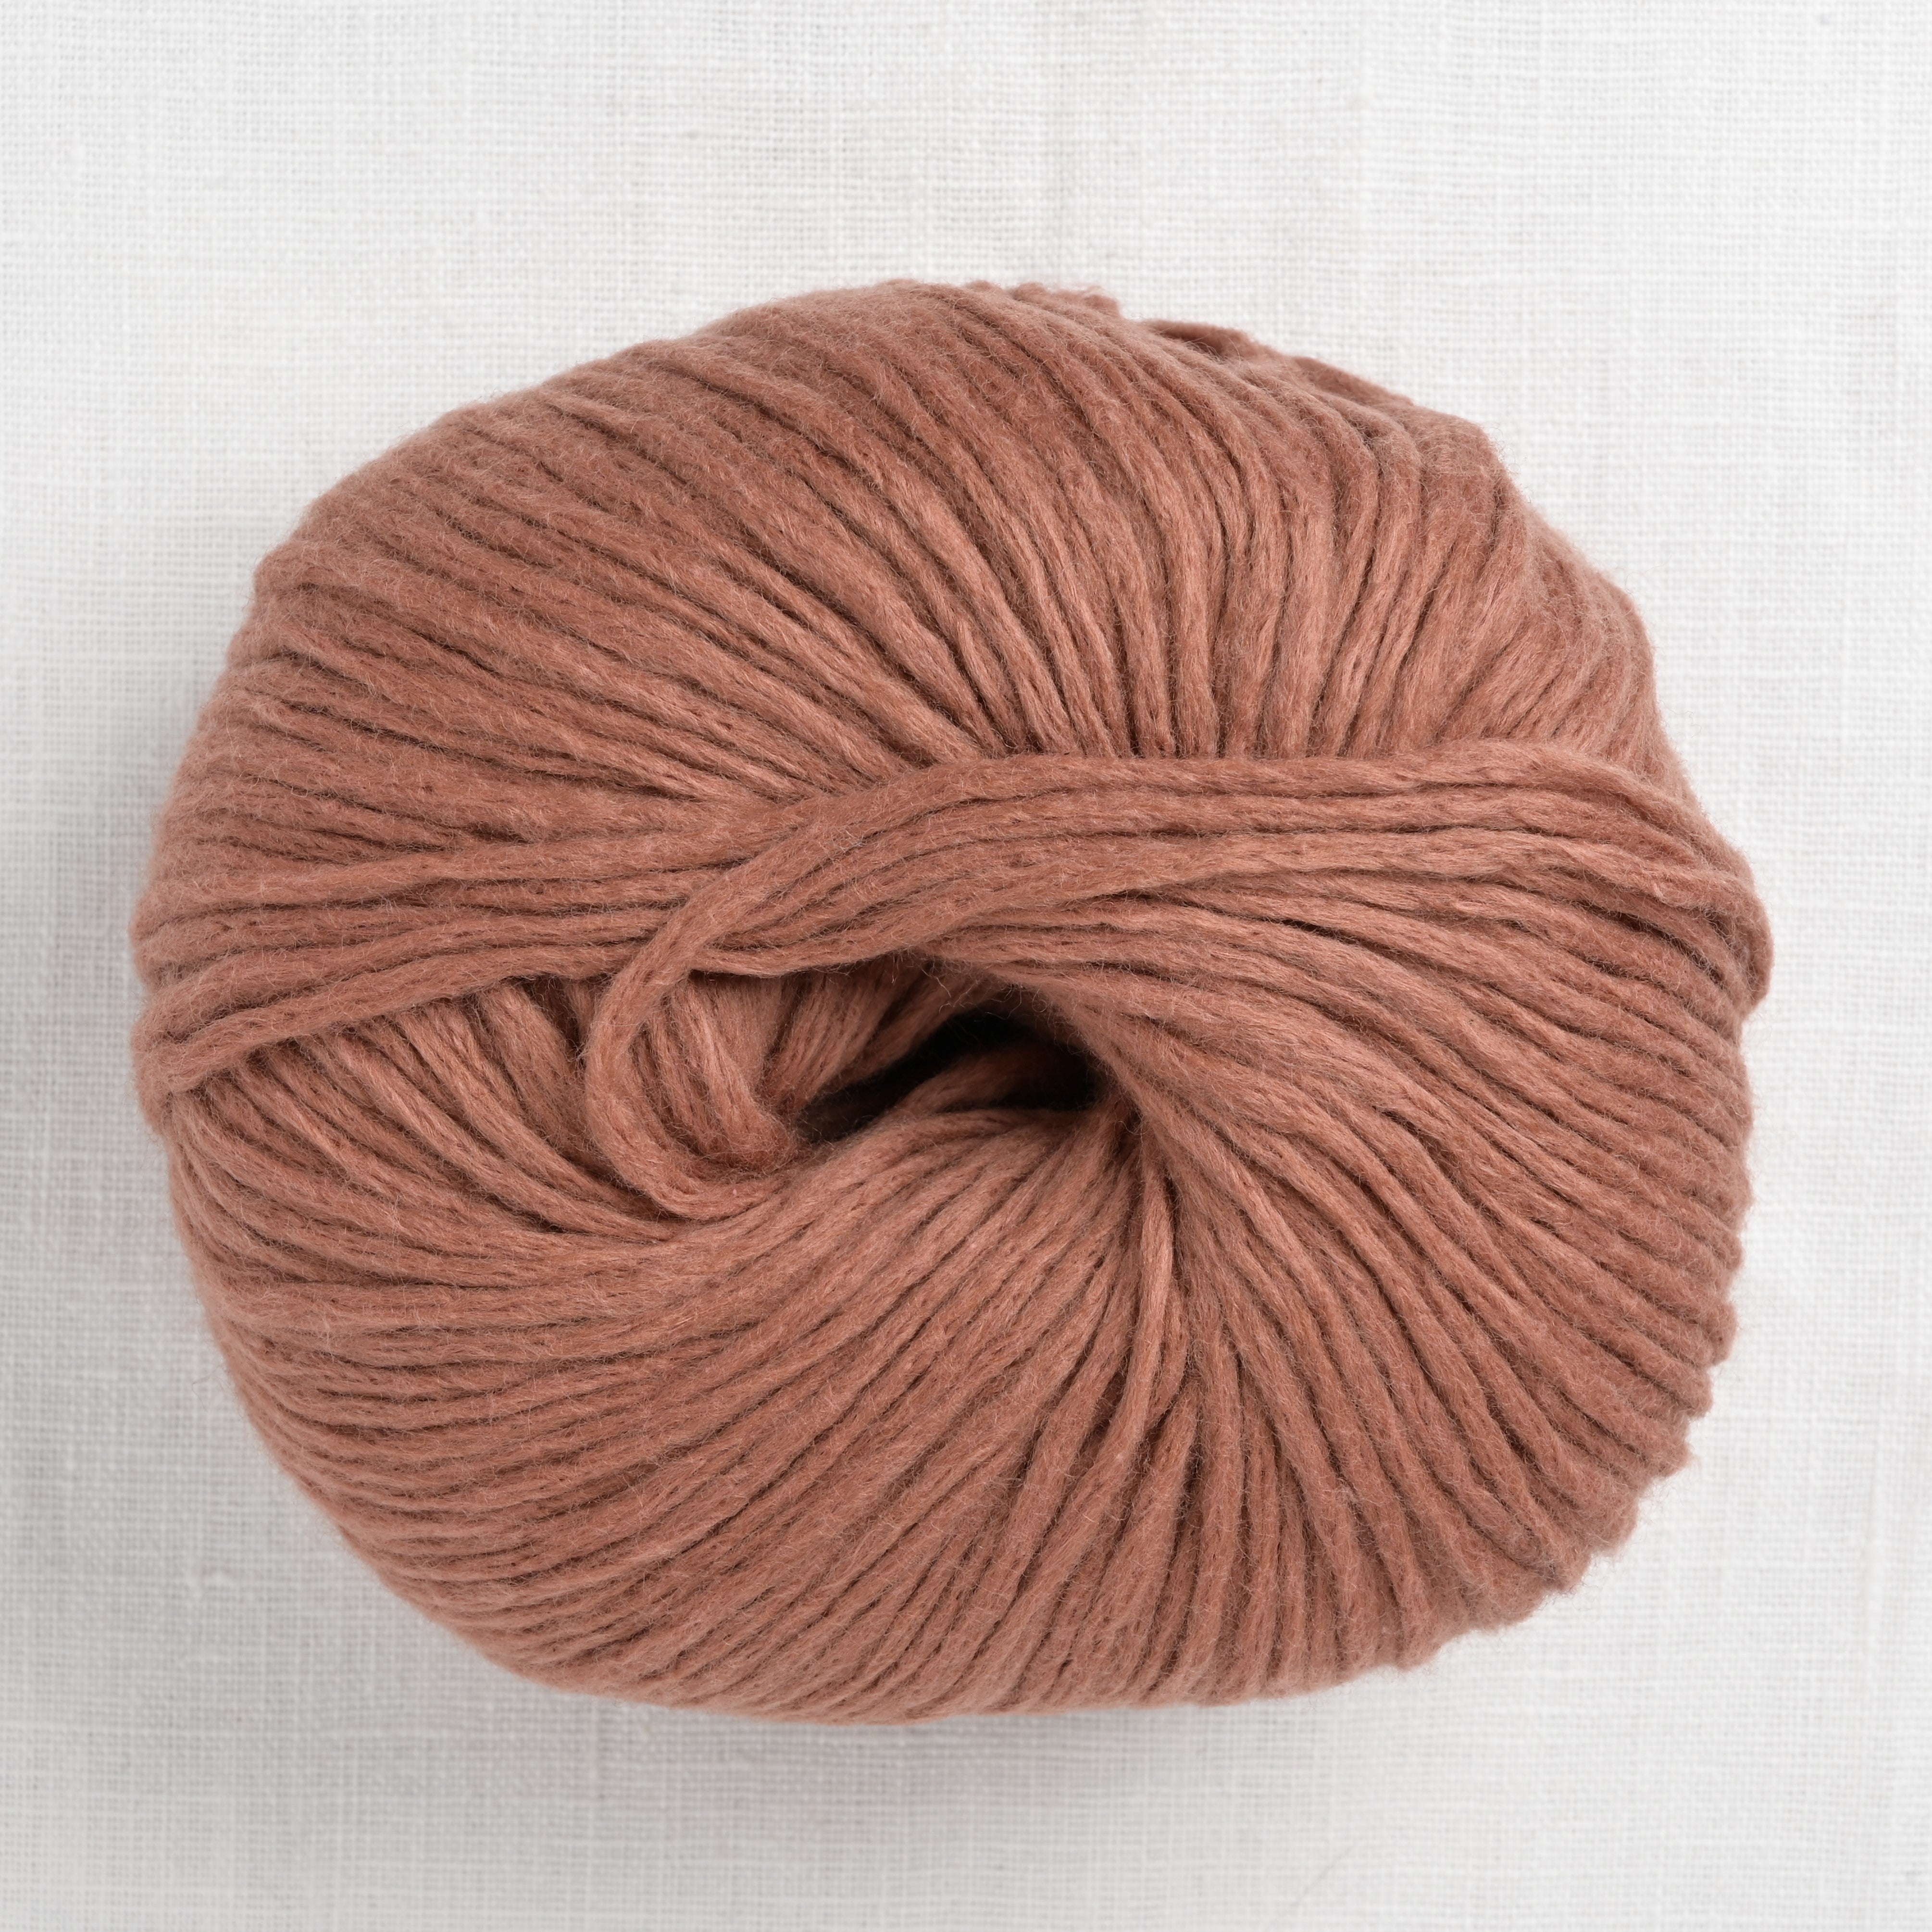 Rowan Cotton Wool Mushy 202